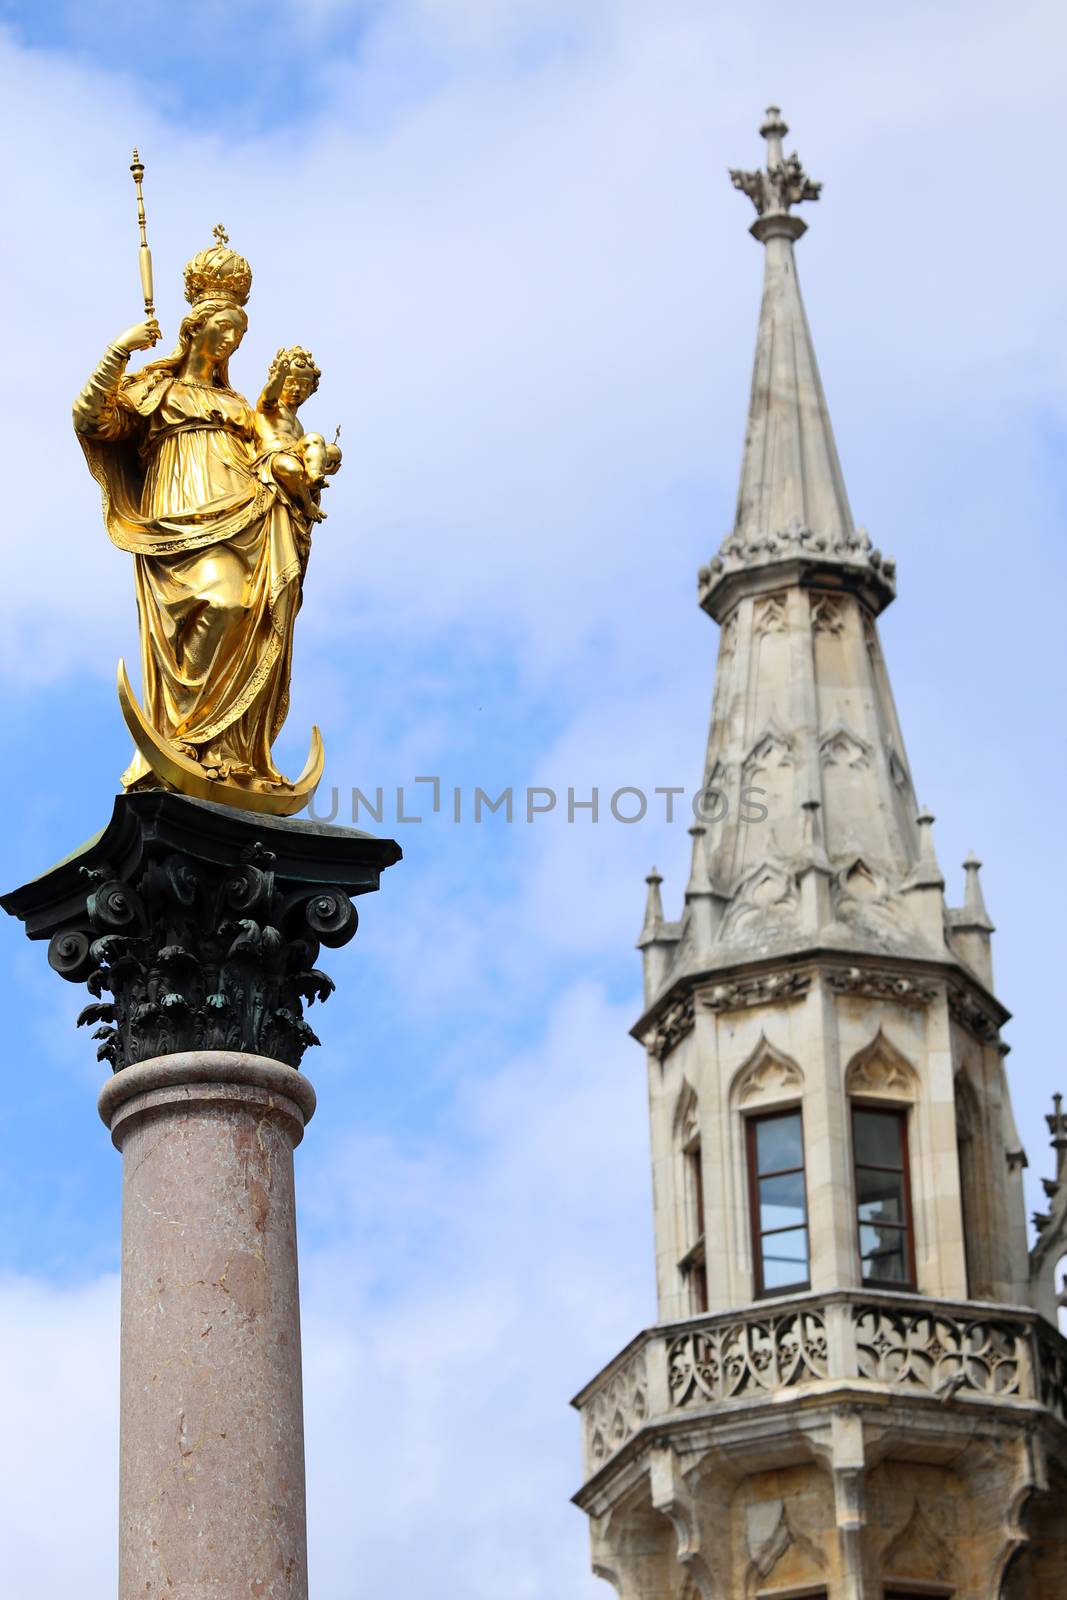 The Golden statue of Mary (Mariensaule), a Marian column on the Marienplatz in Munich, German